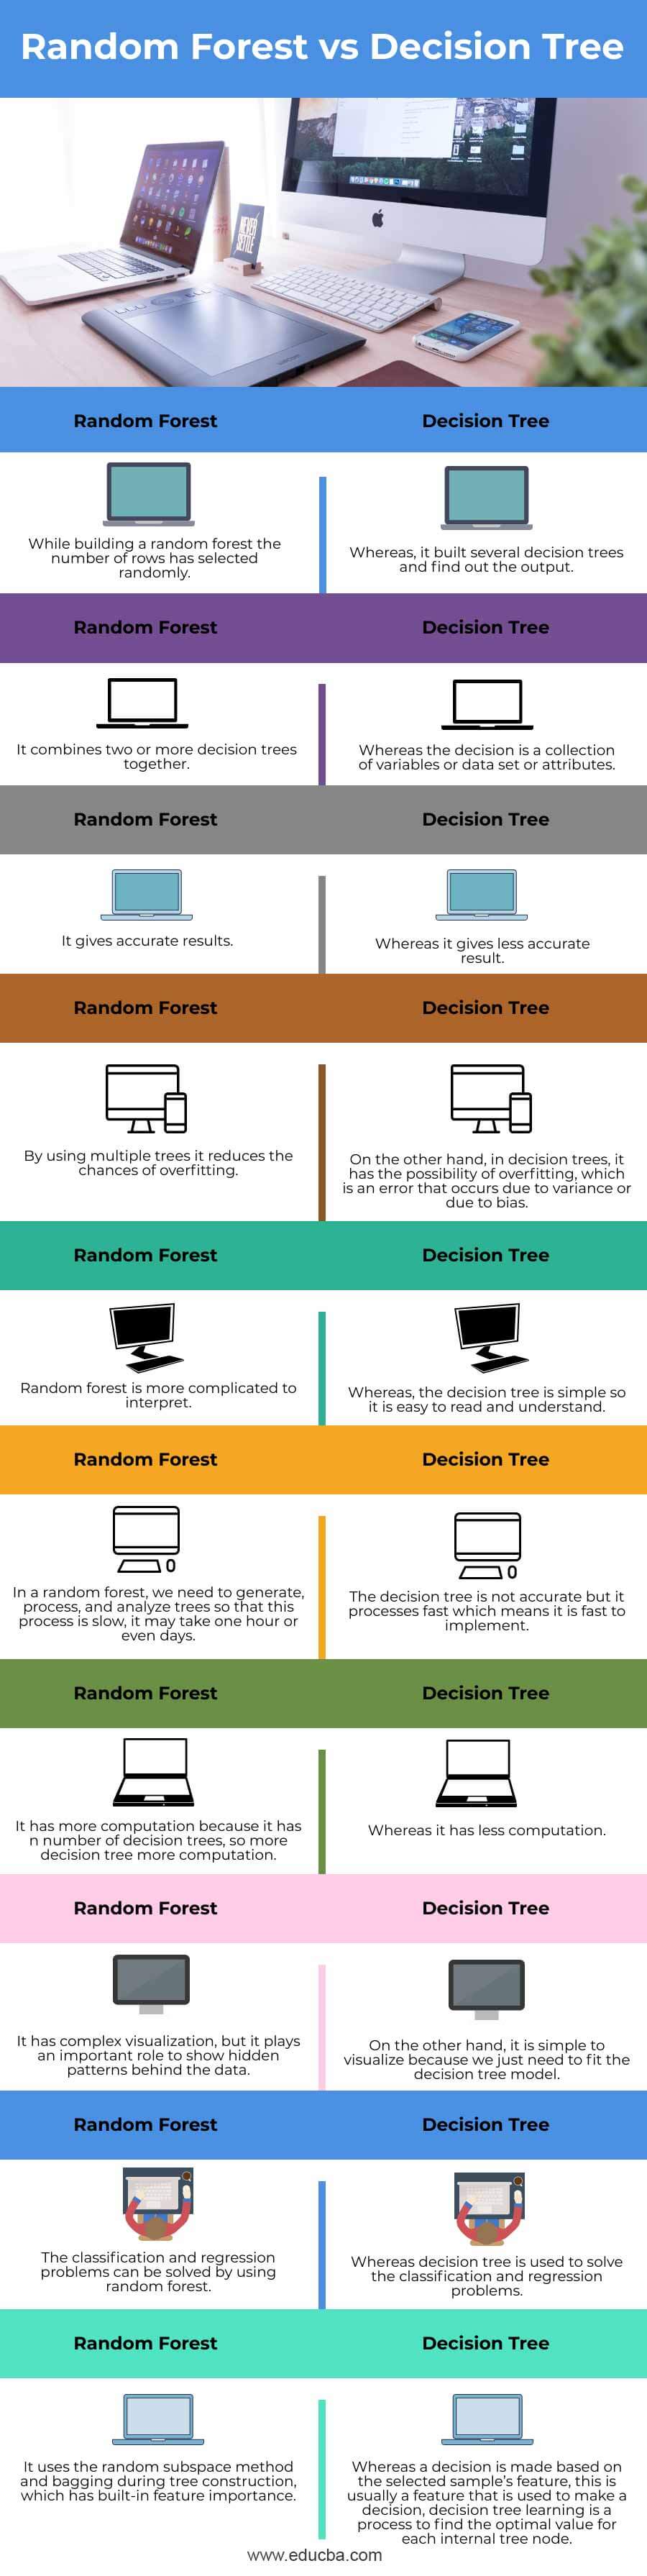 Random-Forest-vs-Decision-Tree-info